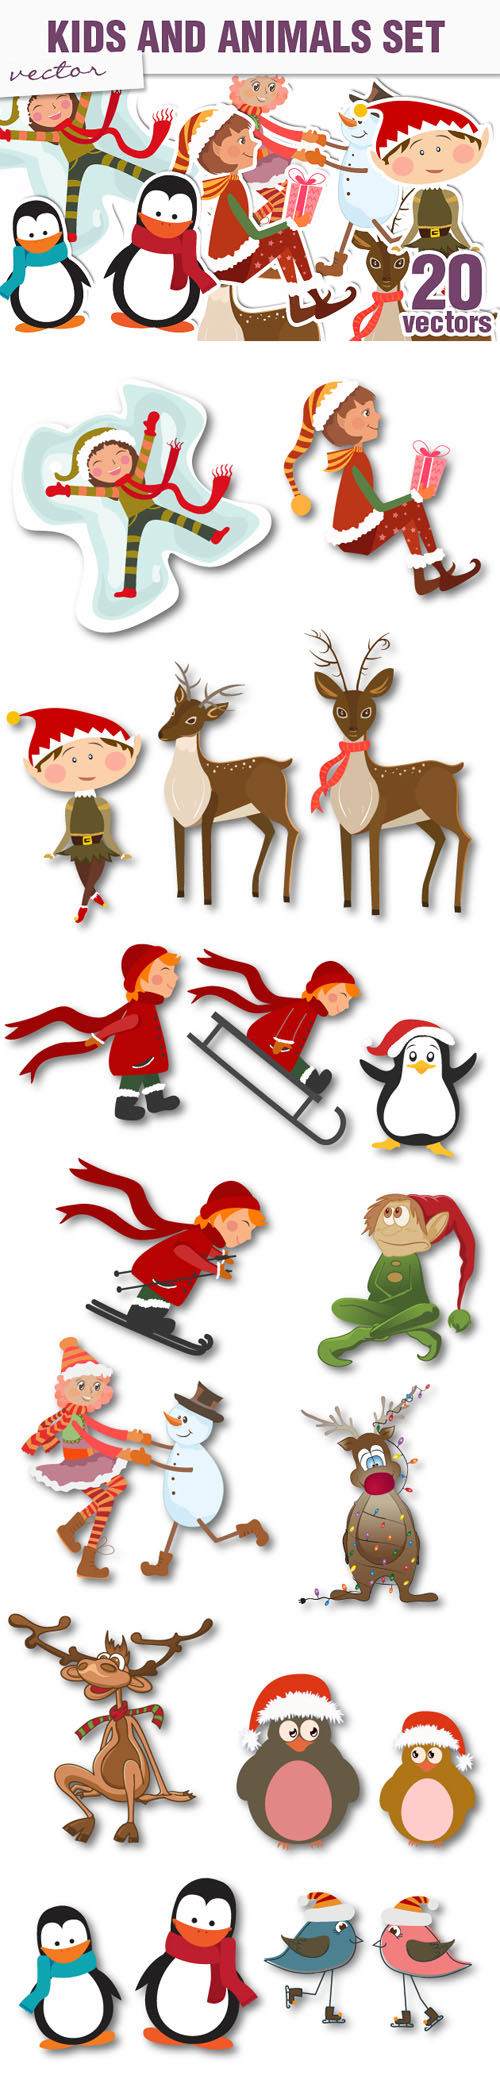 Designtnt - Christmas Kids and Animals